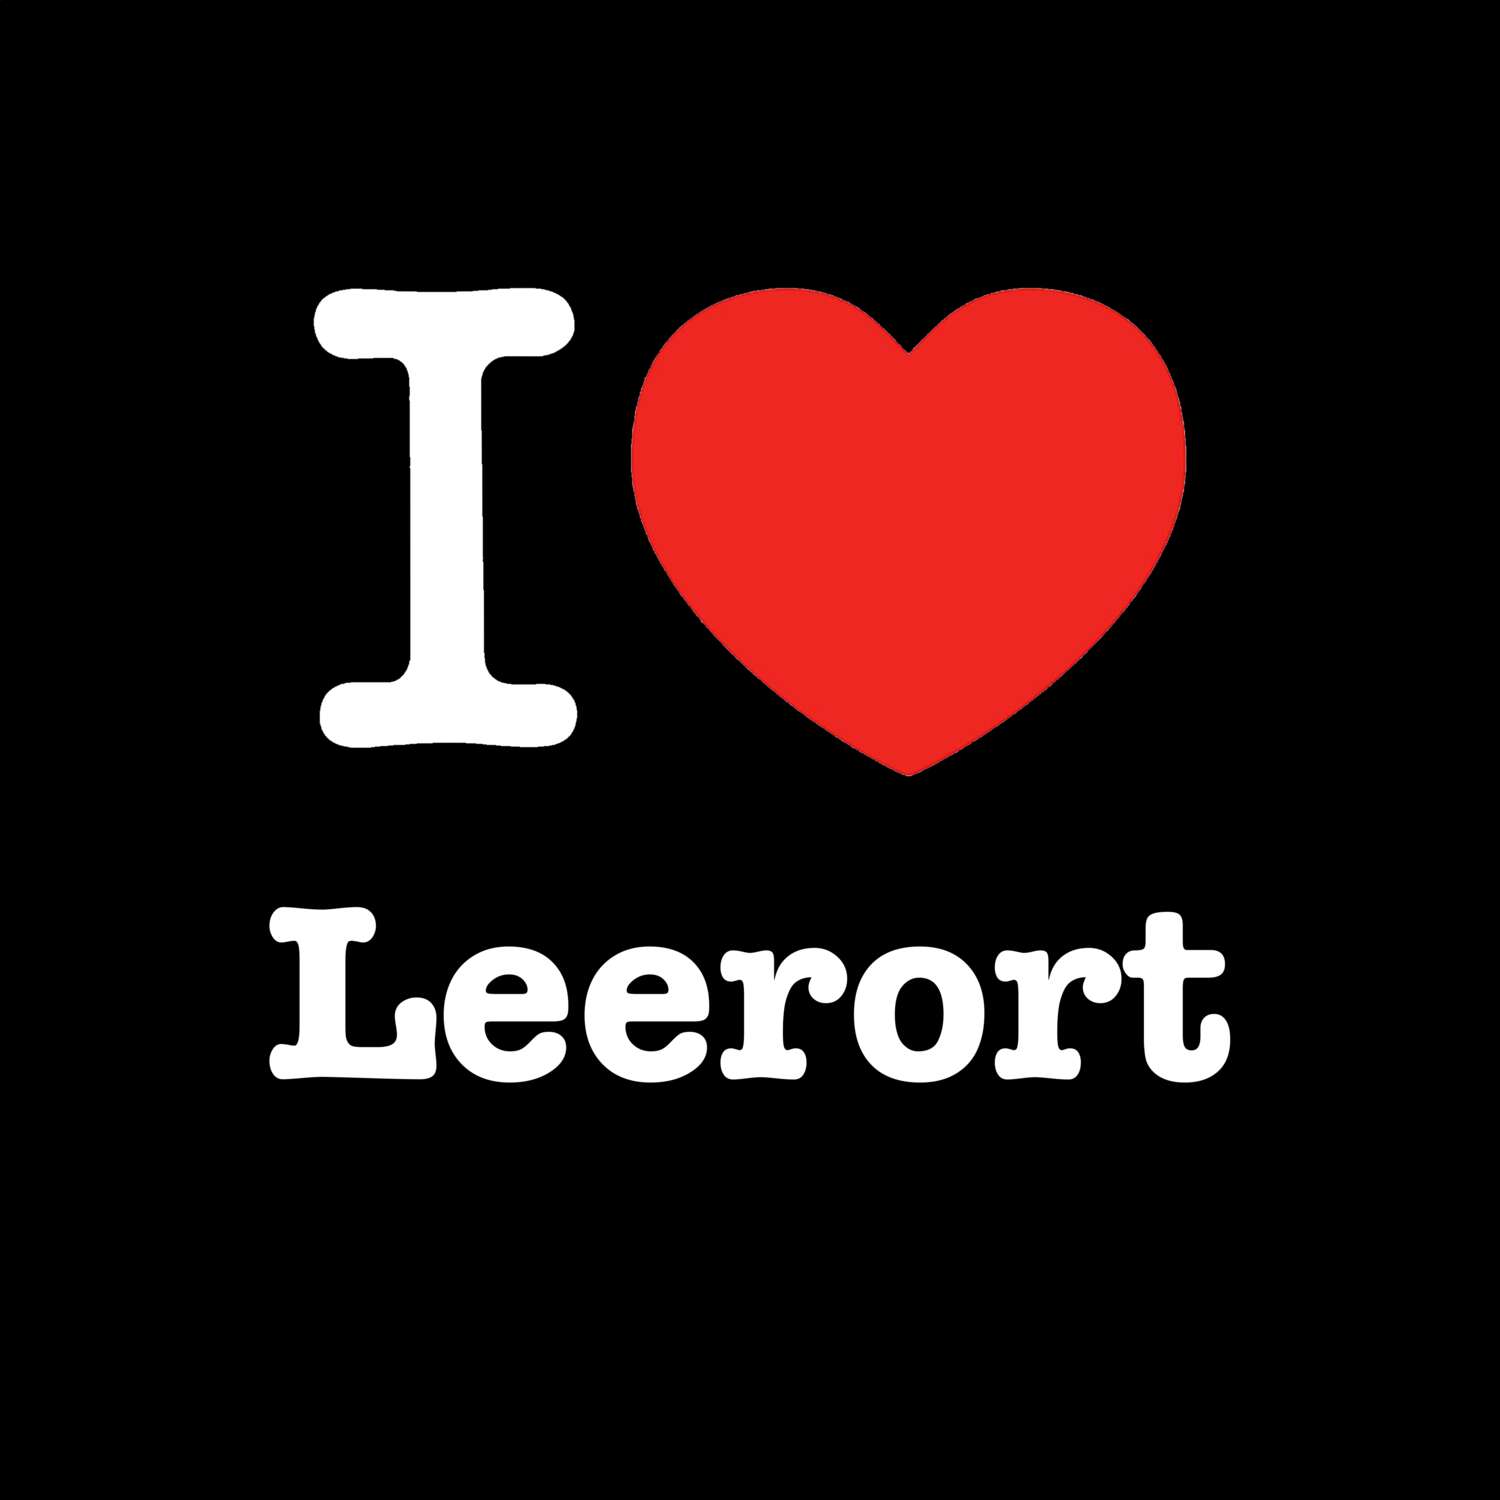 Leerort T-Shirt »I love«